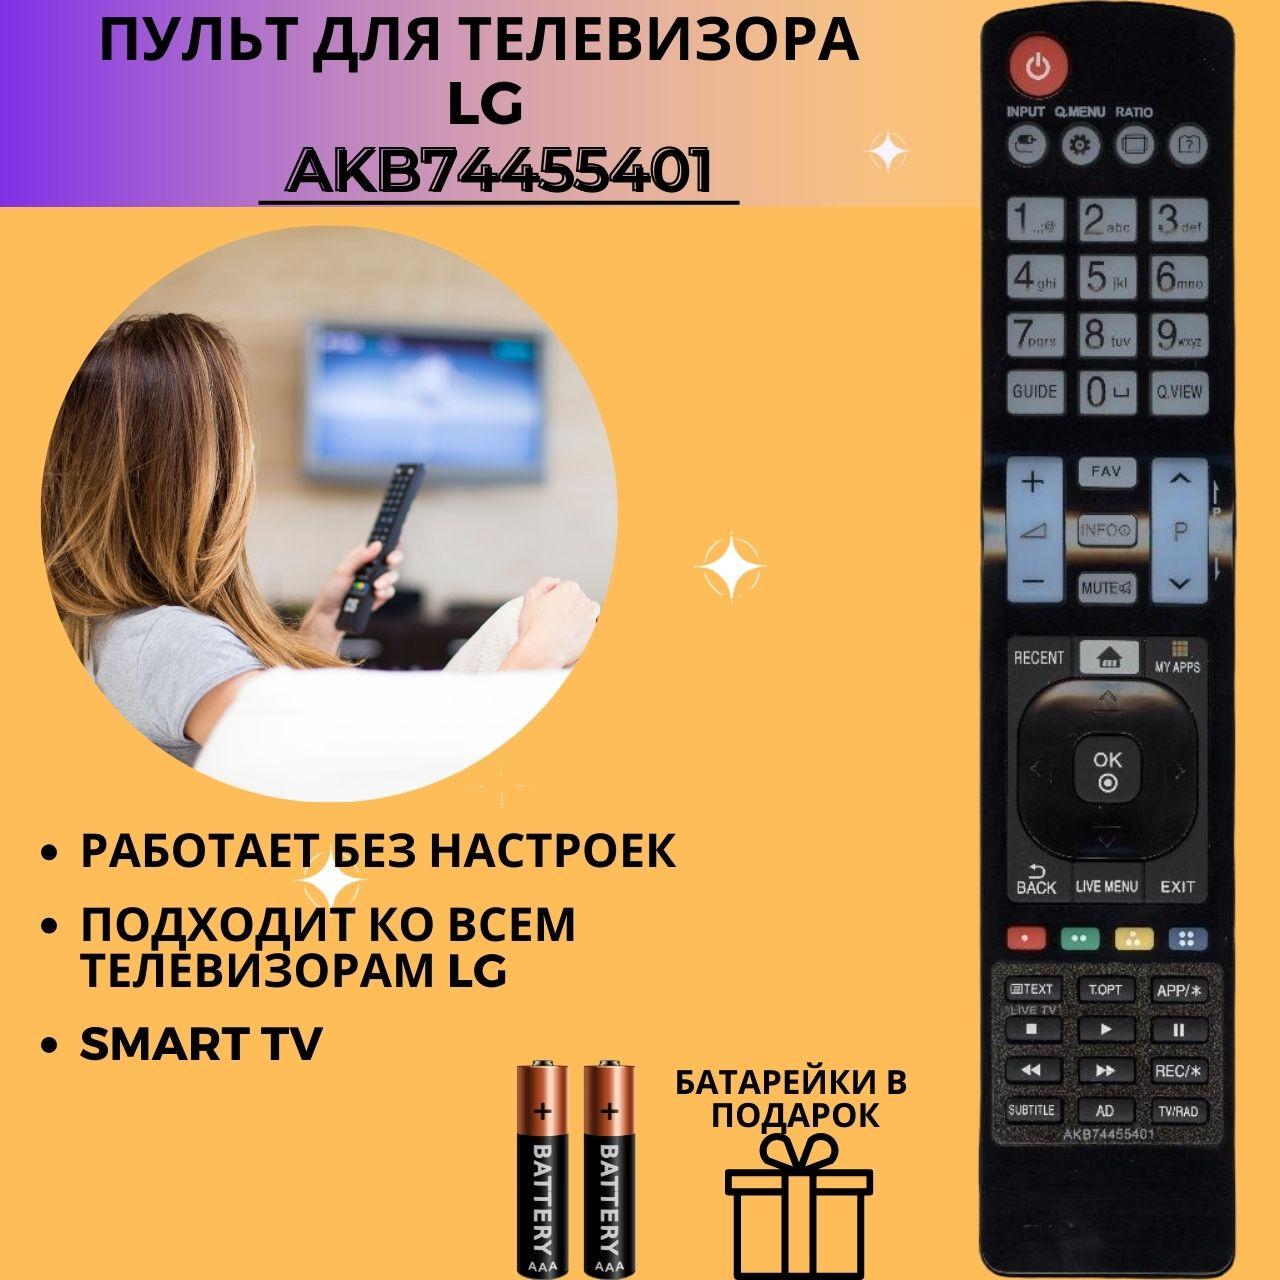 Пульт телевизионный LG AKB74455401 Smart TV ic как ориг длинный корпус LED LCD NEW